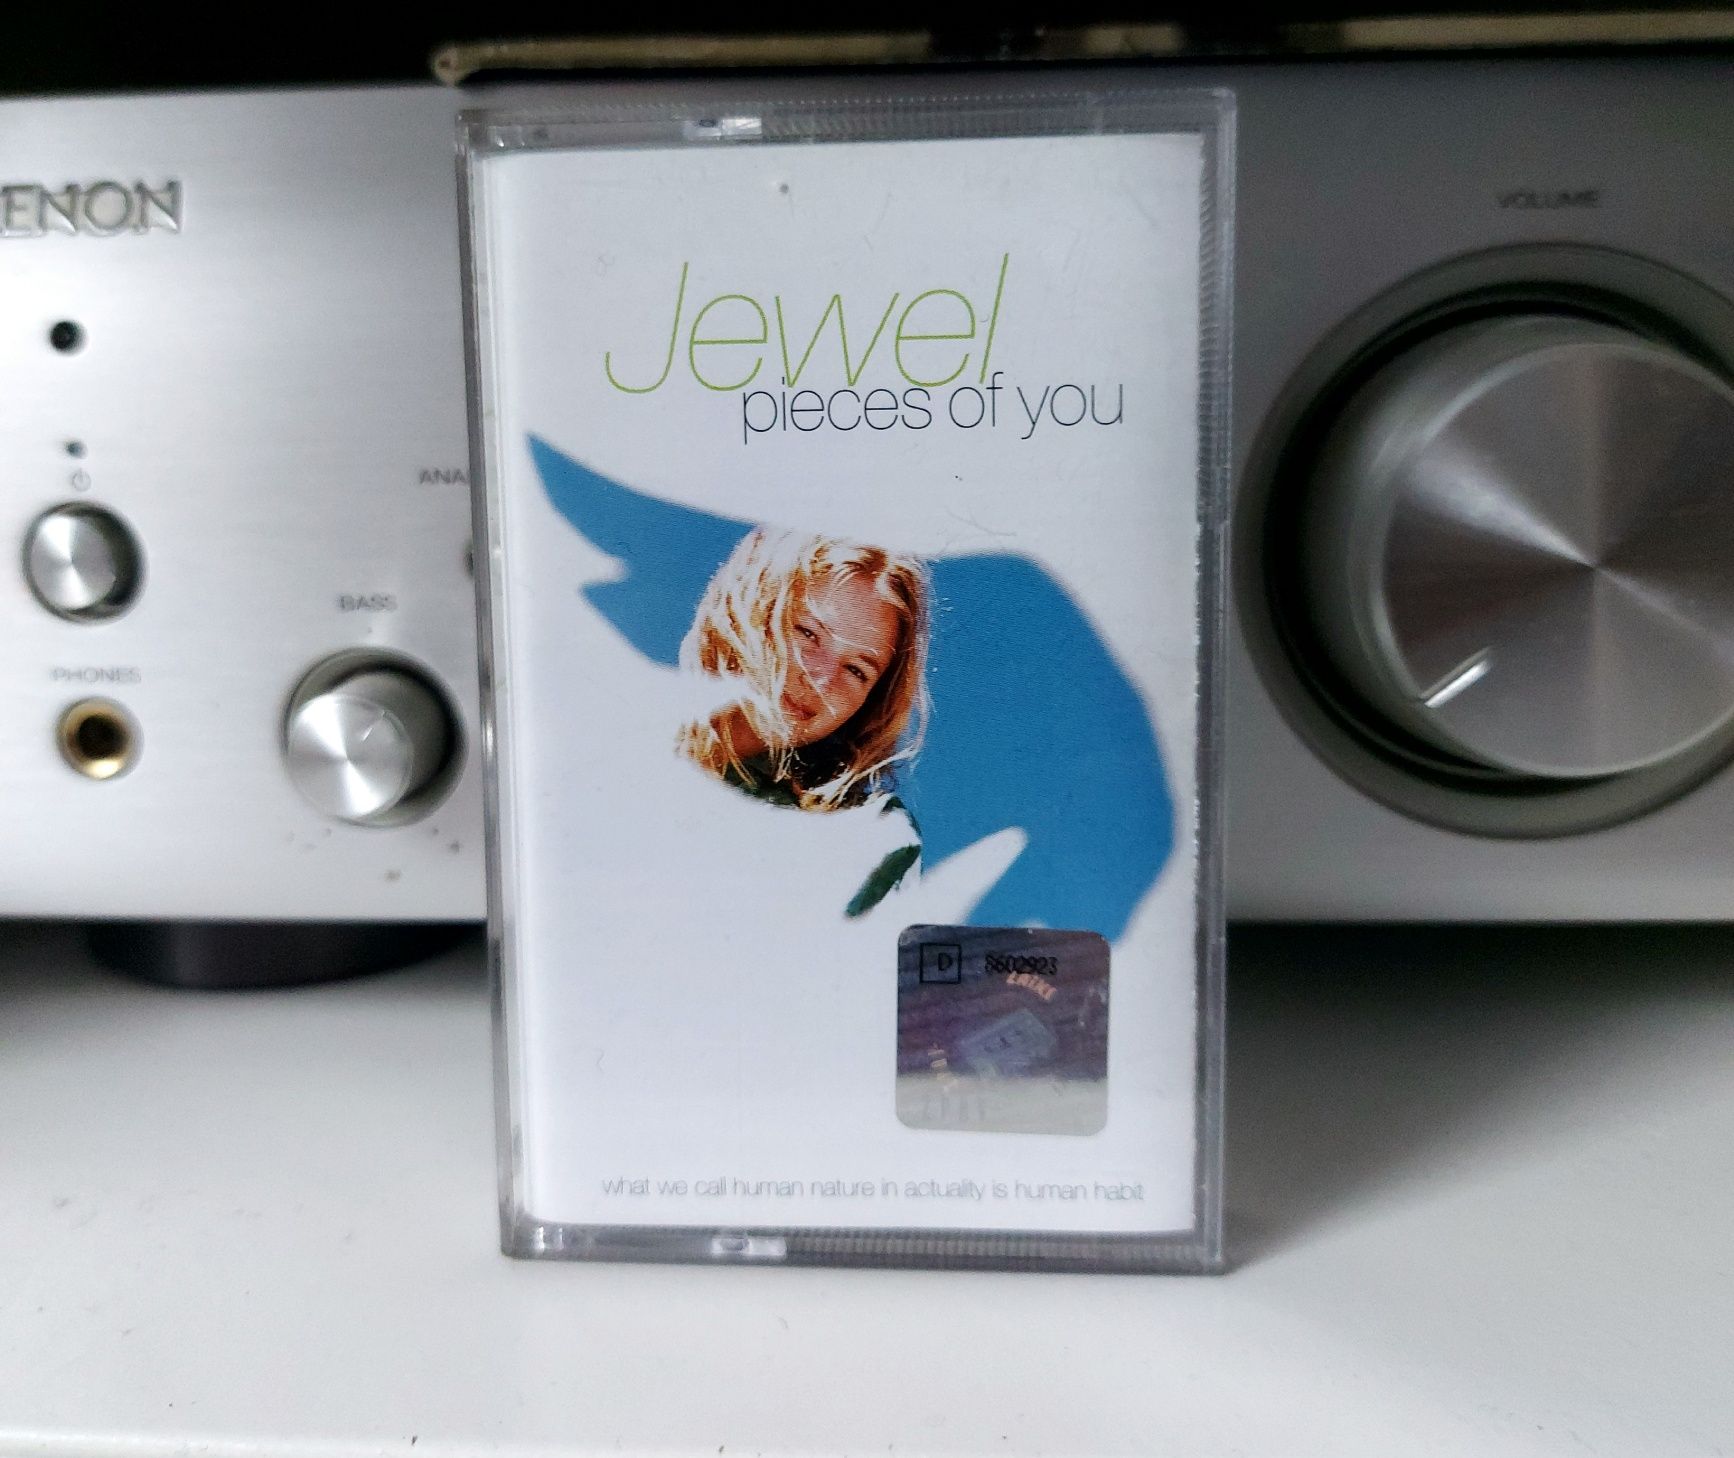 kaseta audio Jawel pieces of you hologram